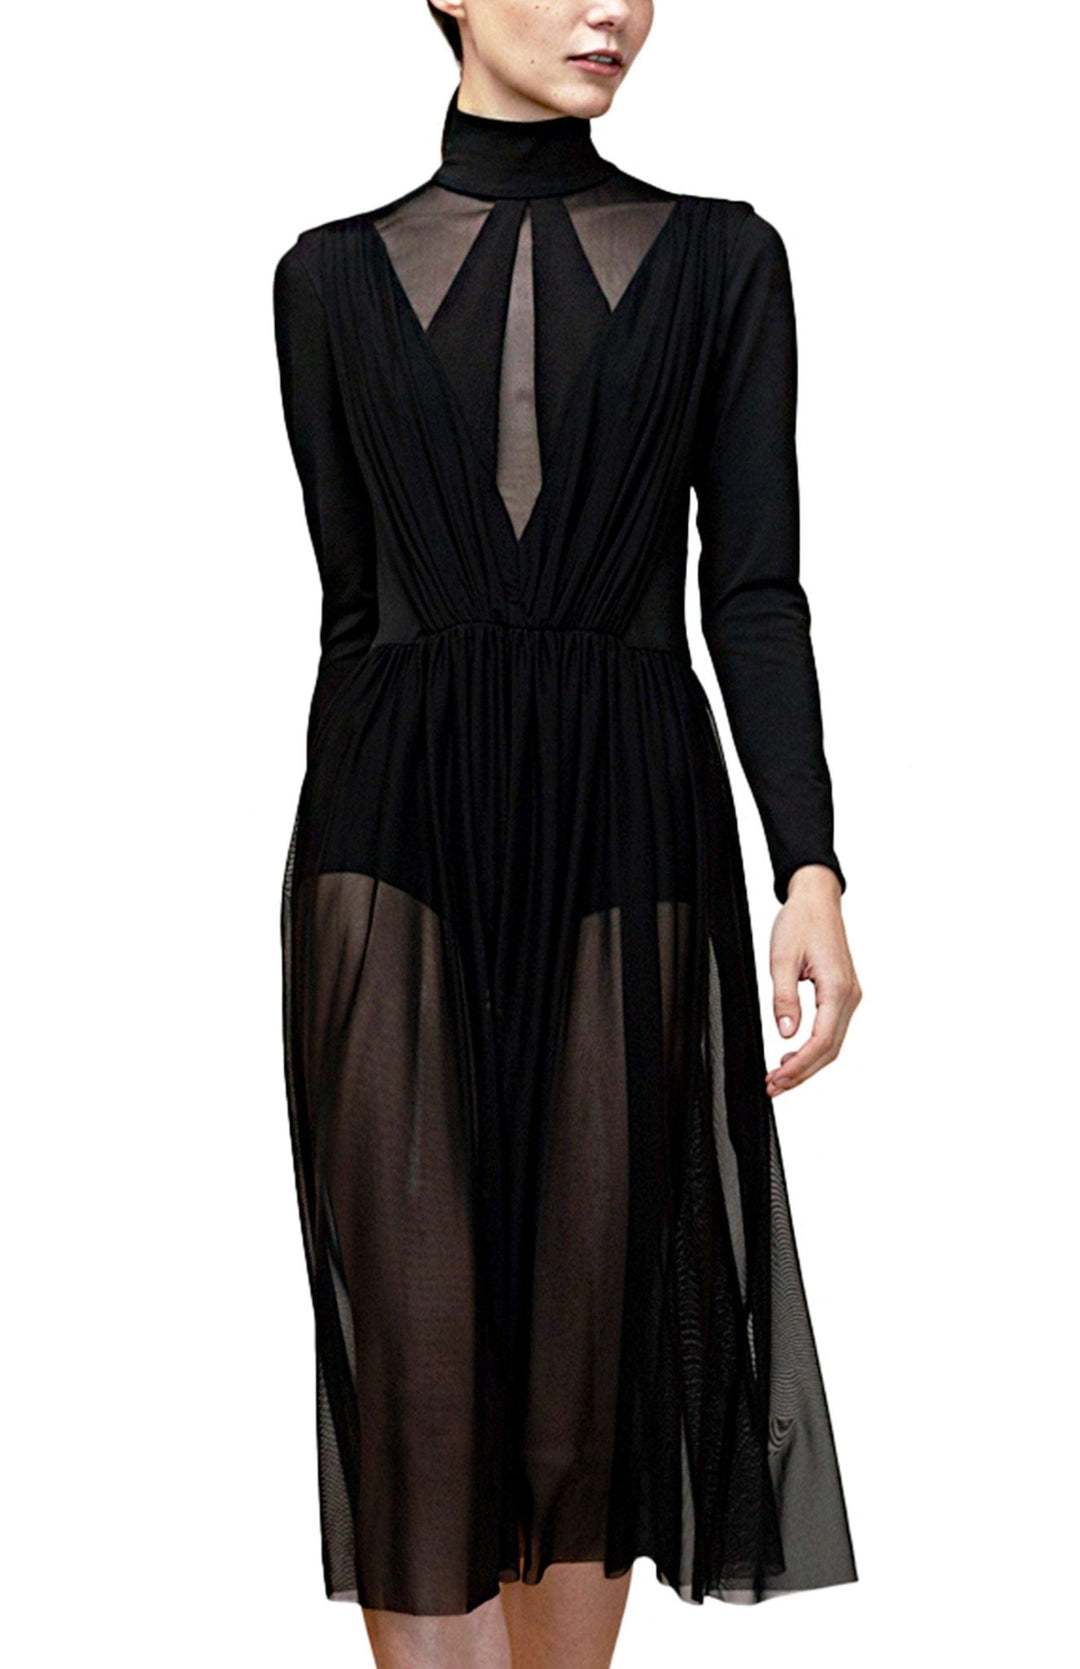 Elegant black bodysuit dress